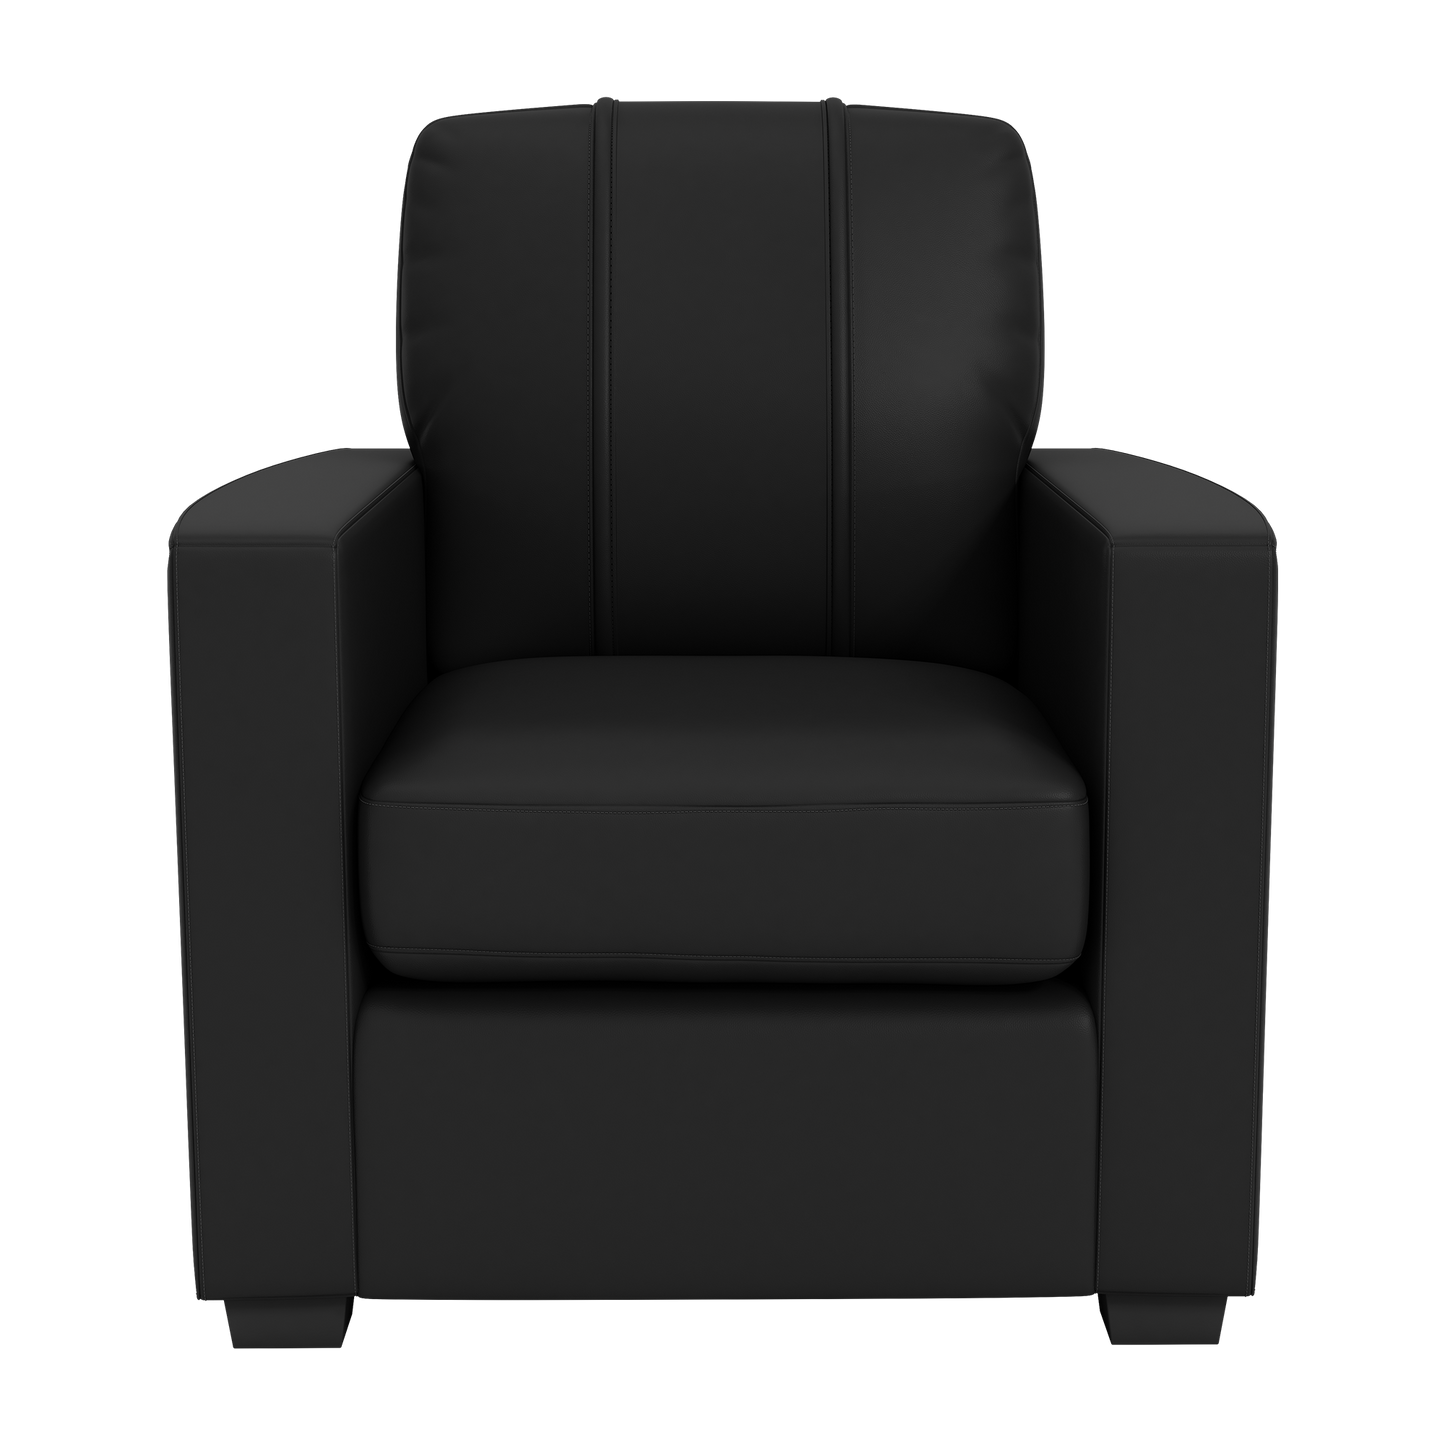 Silver Club Chair with Denver Nuggets Alternate Logo